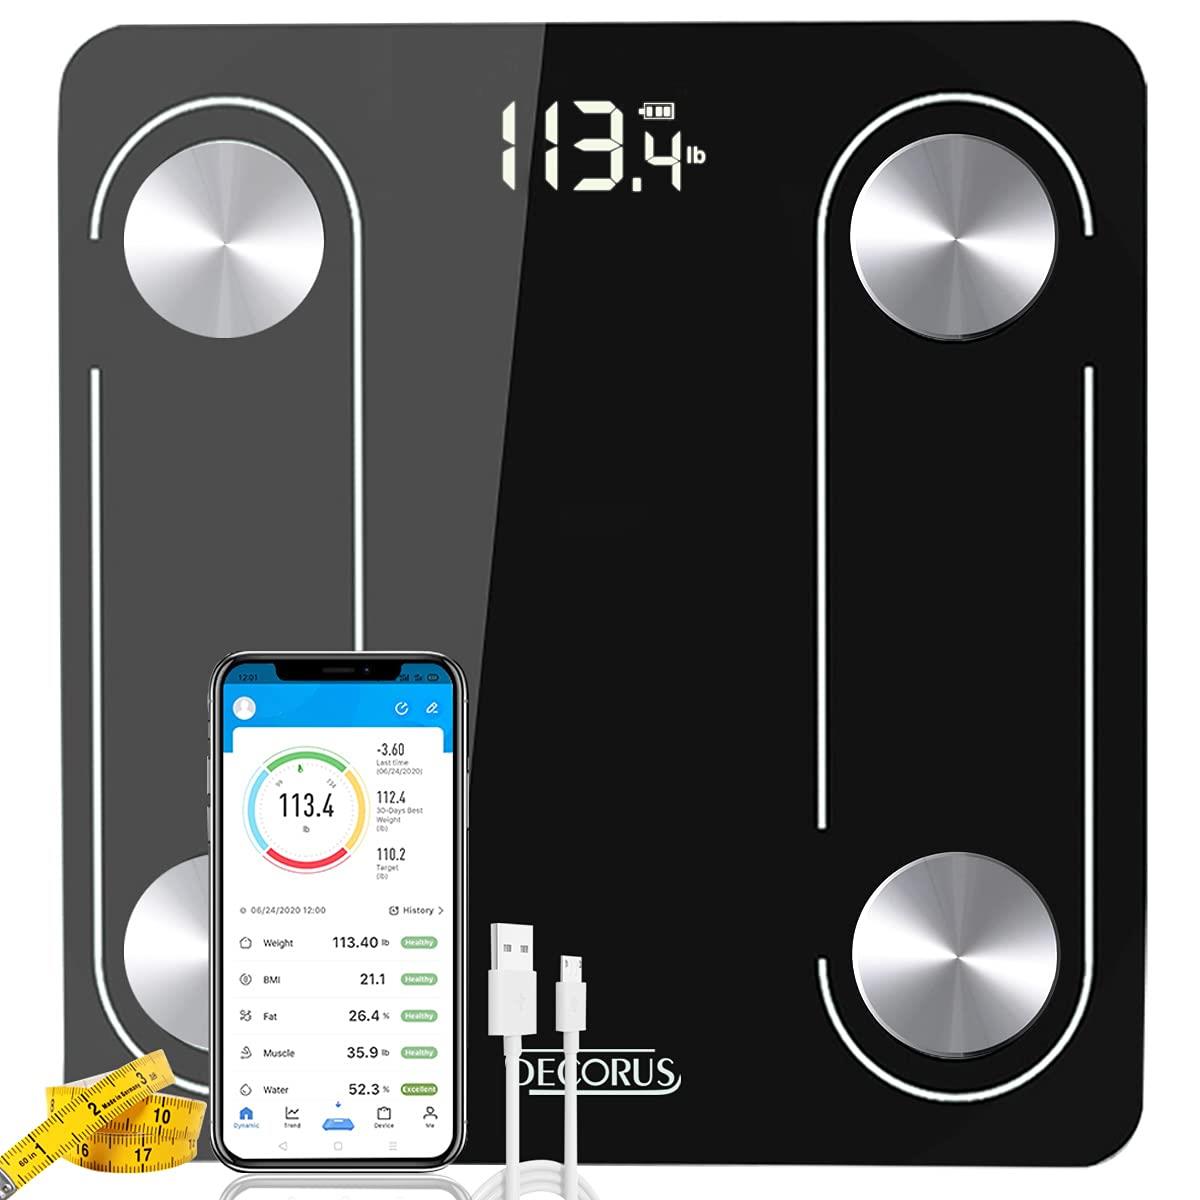 Bluetooth Smart Scale for Body Fat, Wireless Bathroom Digital